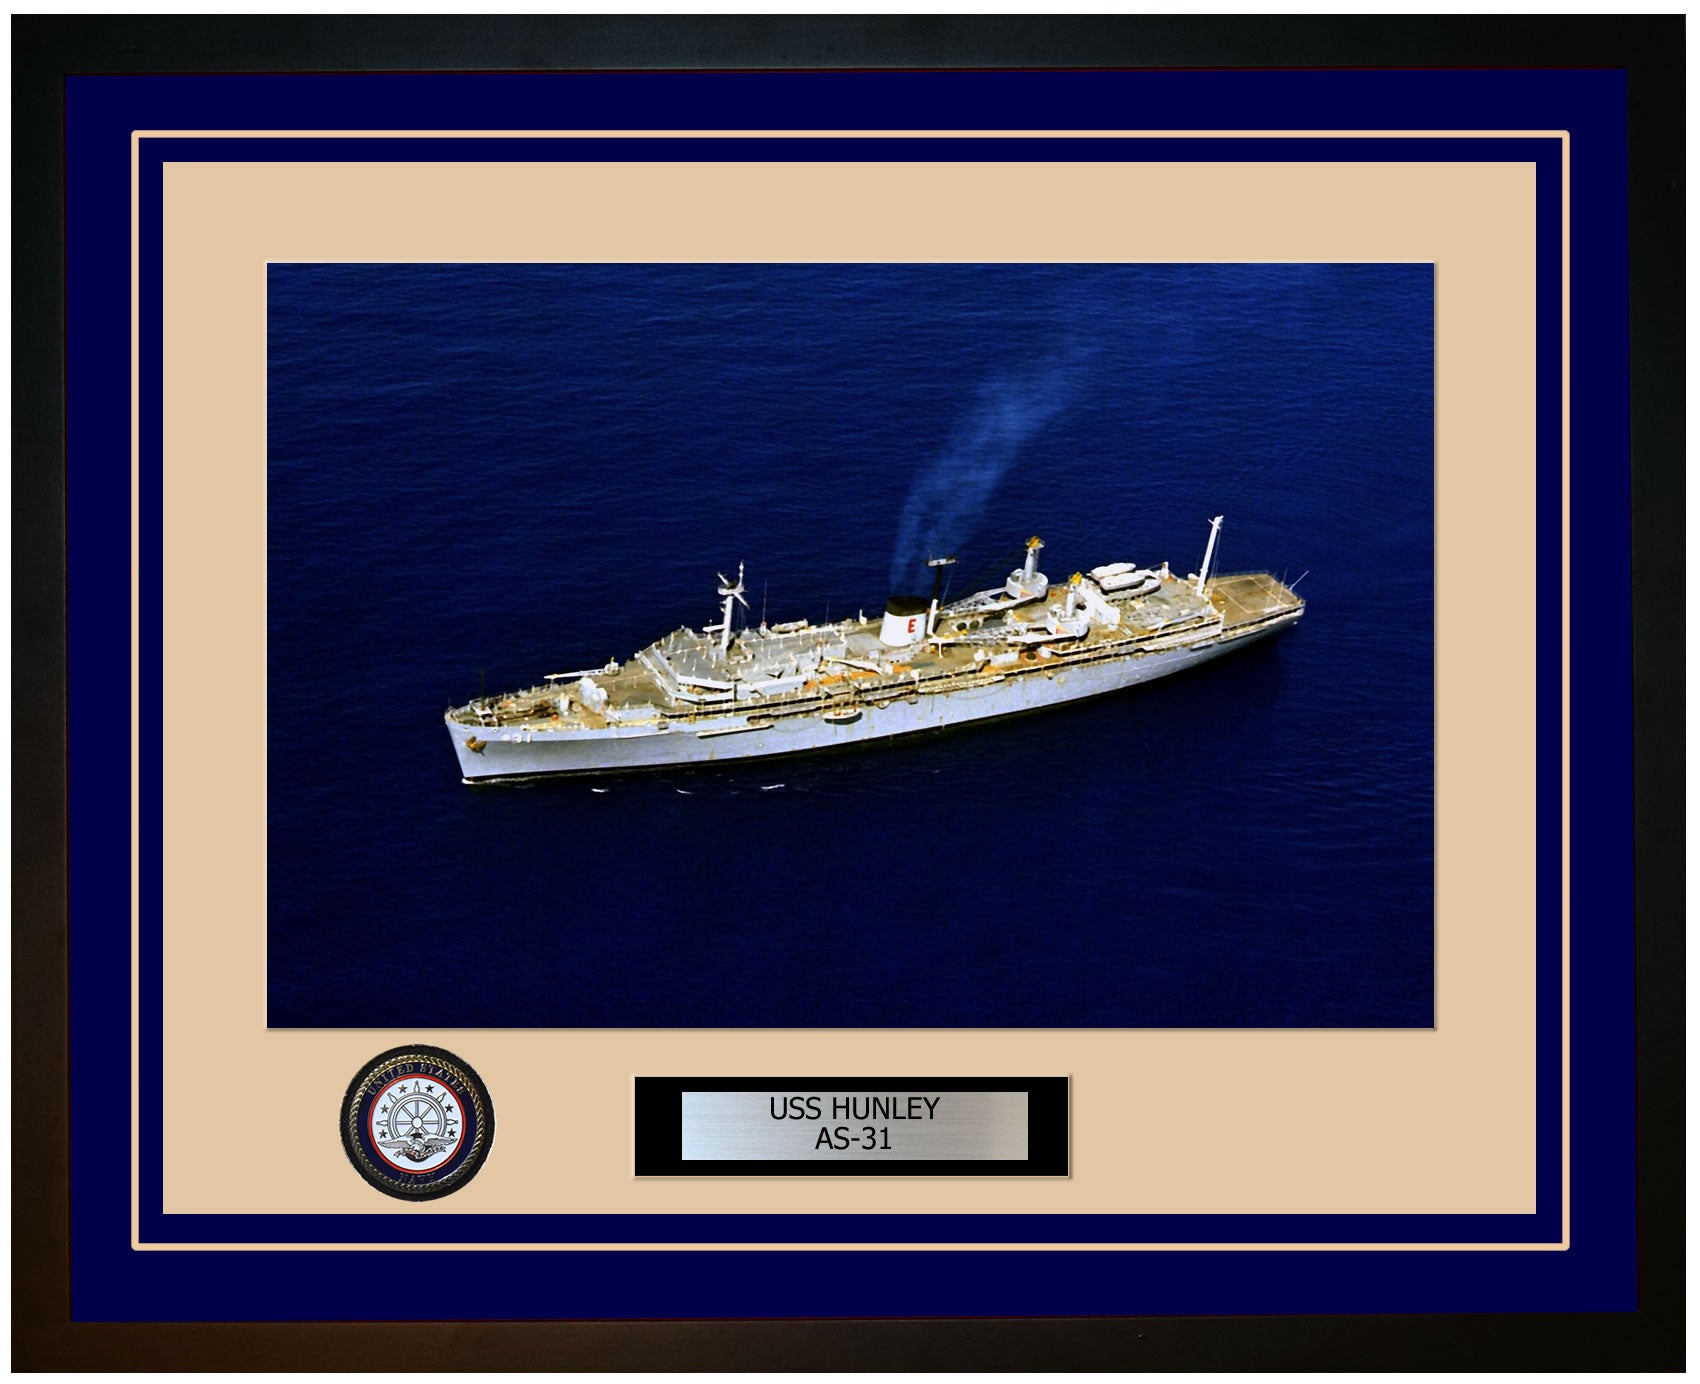 USS HUNLEY AS-31 Framed Navy Ship Photo Blue